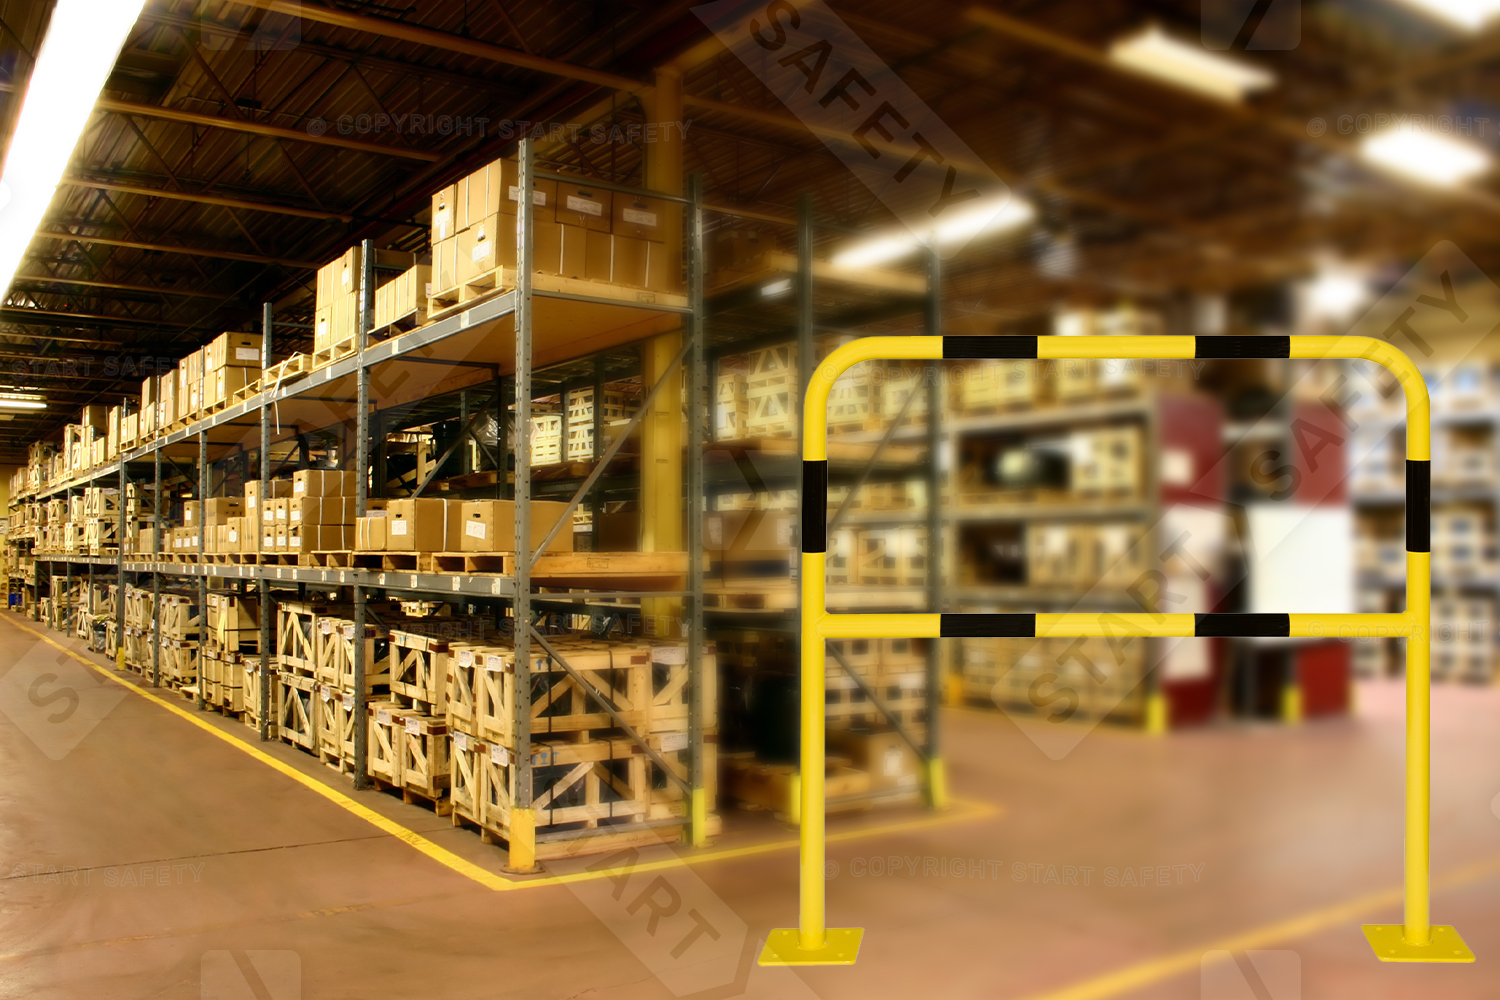 Value Steel Hoop Guard In Warehouse Environment